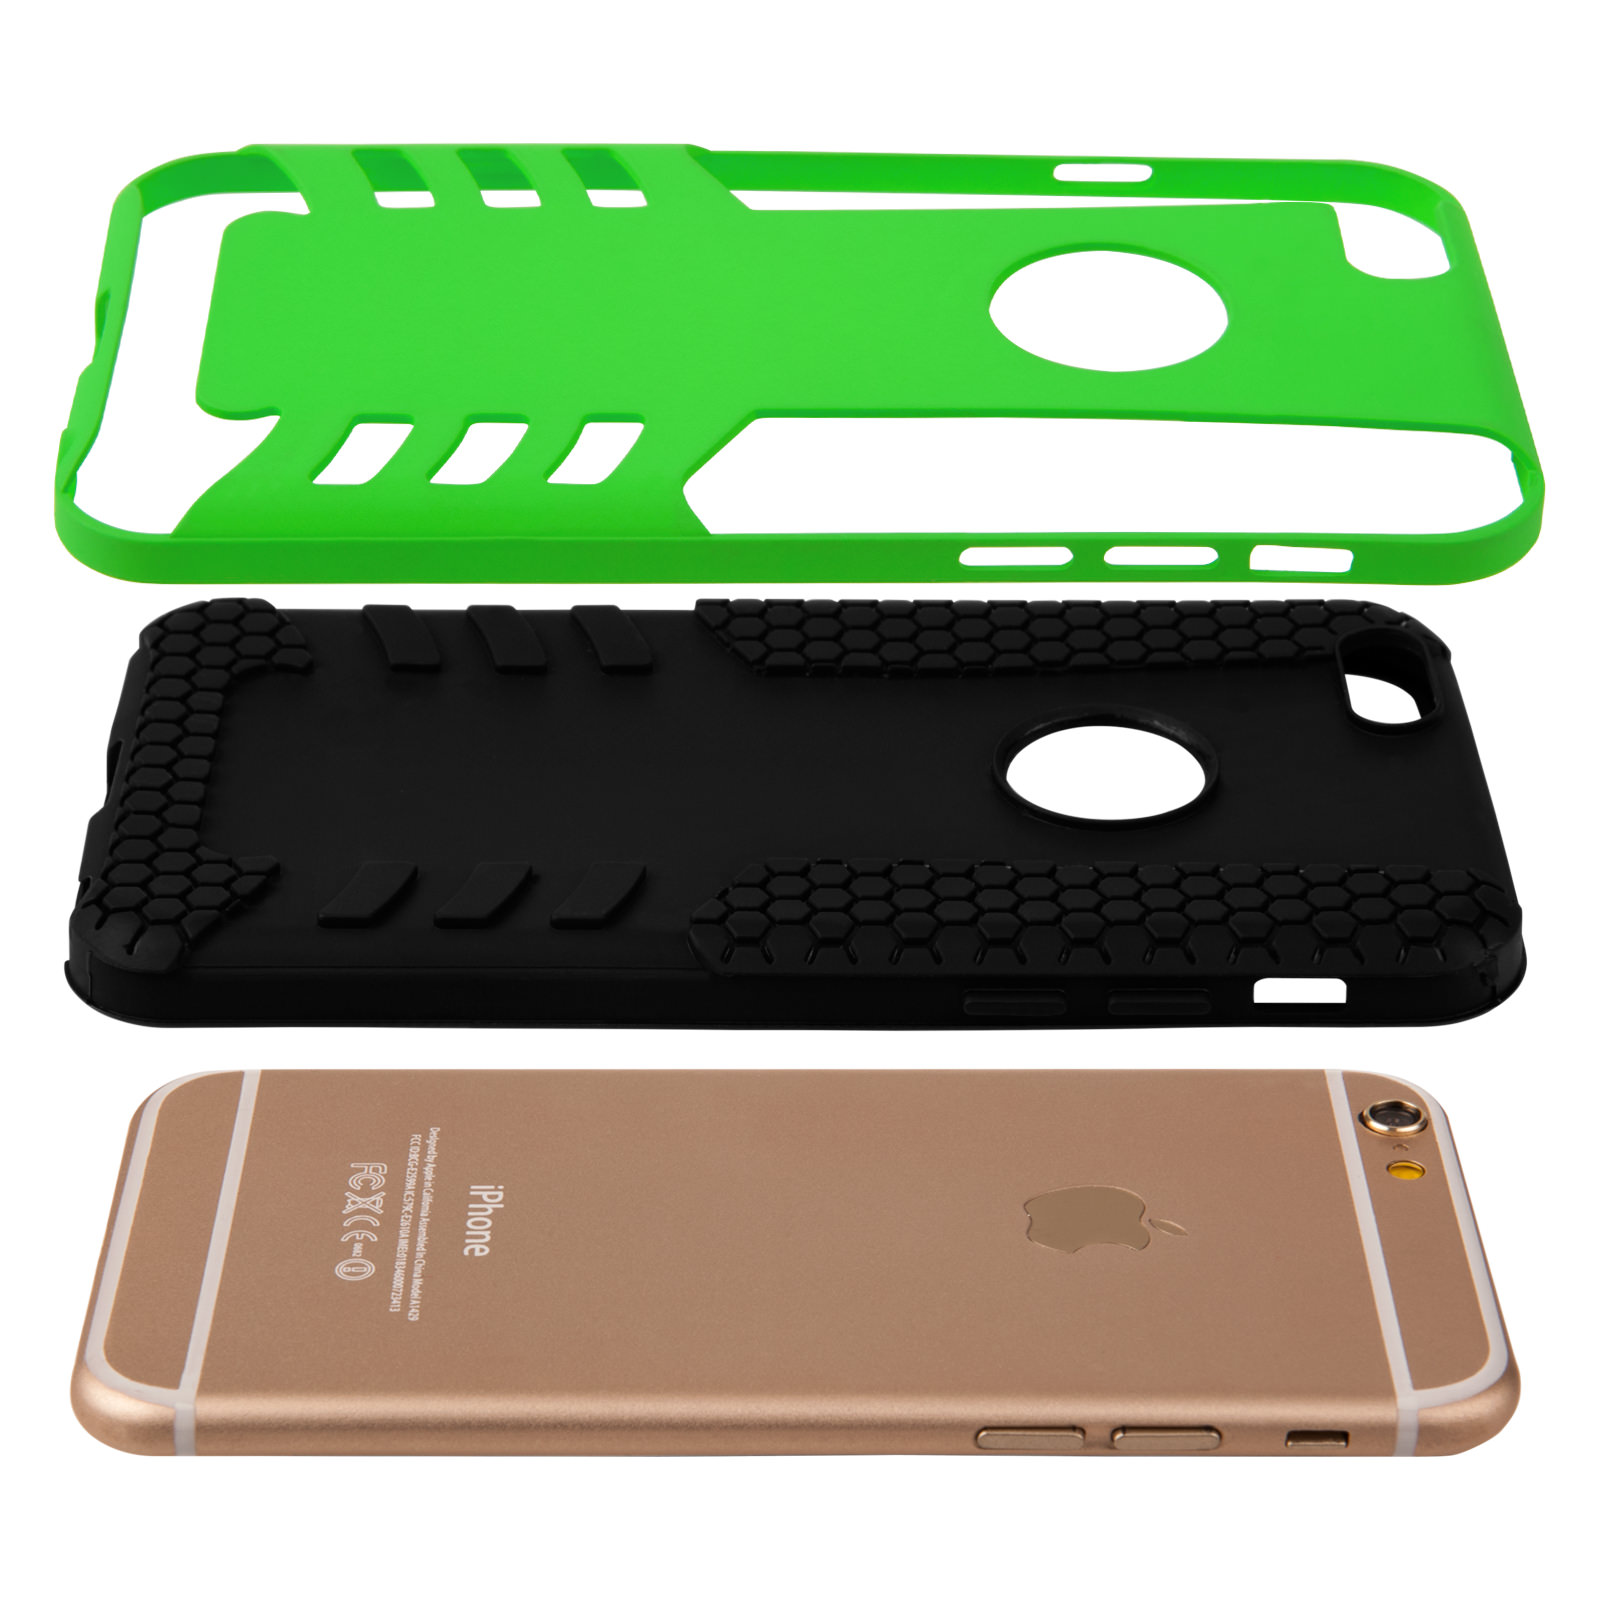 Caseflex iPhone 6 / 6s Border Combo Case - Green